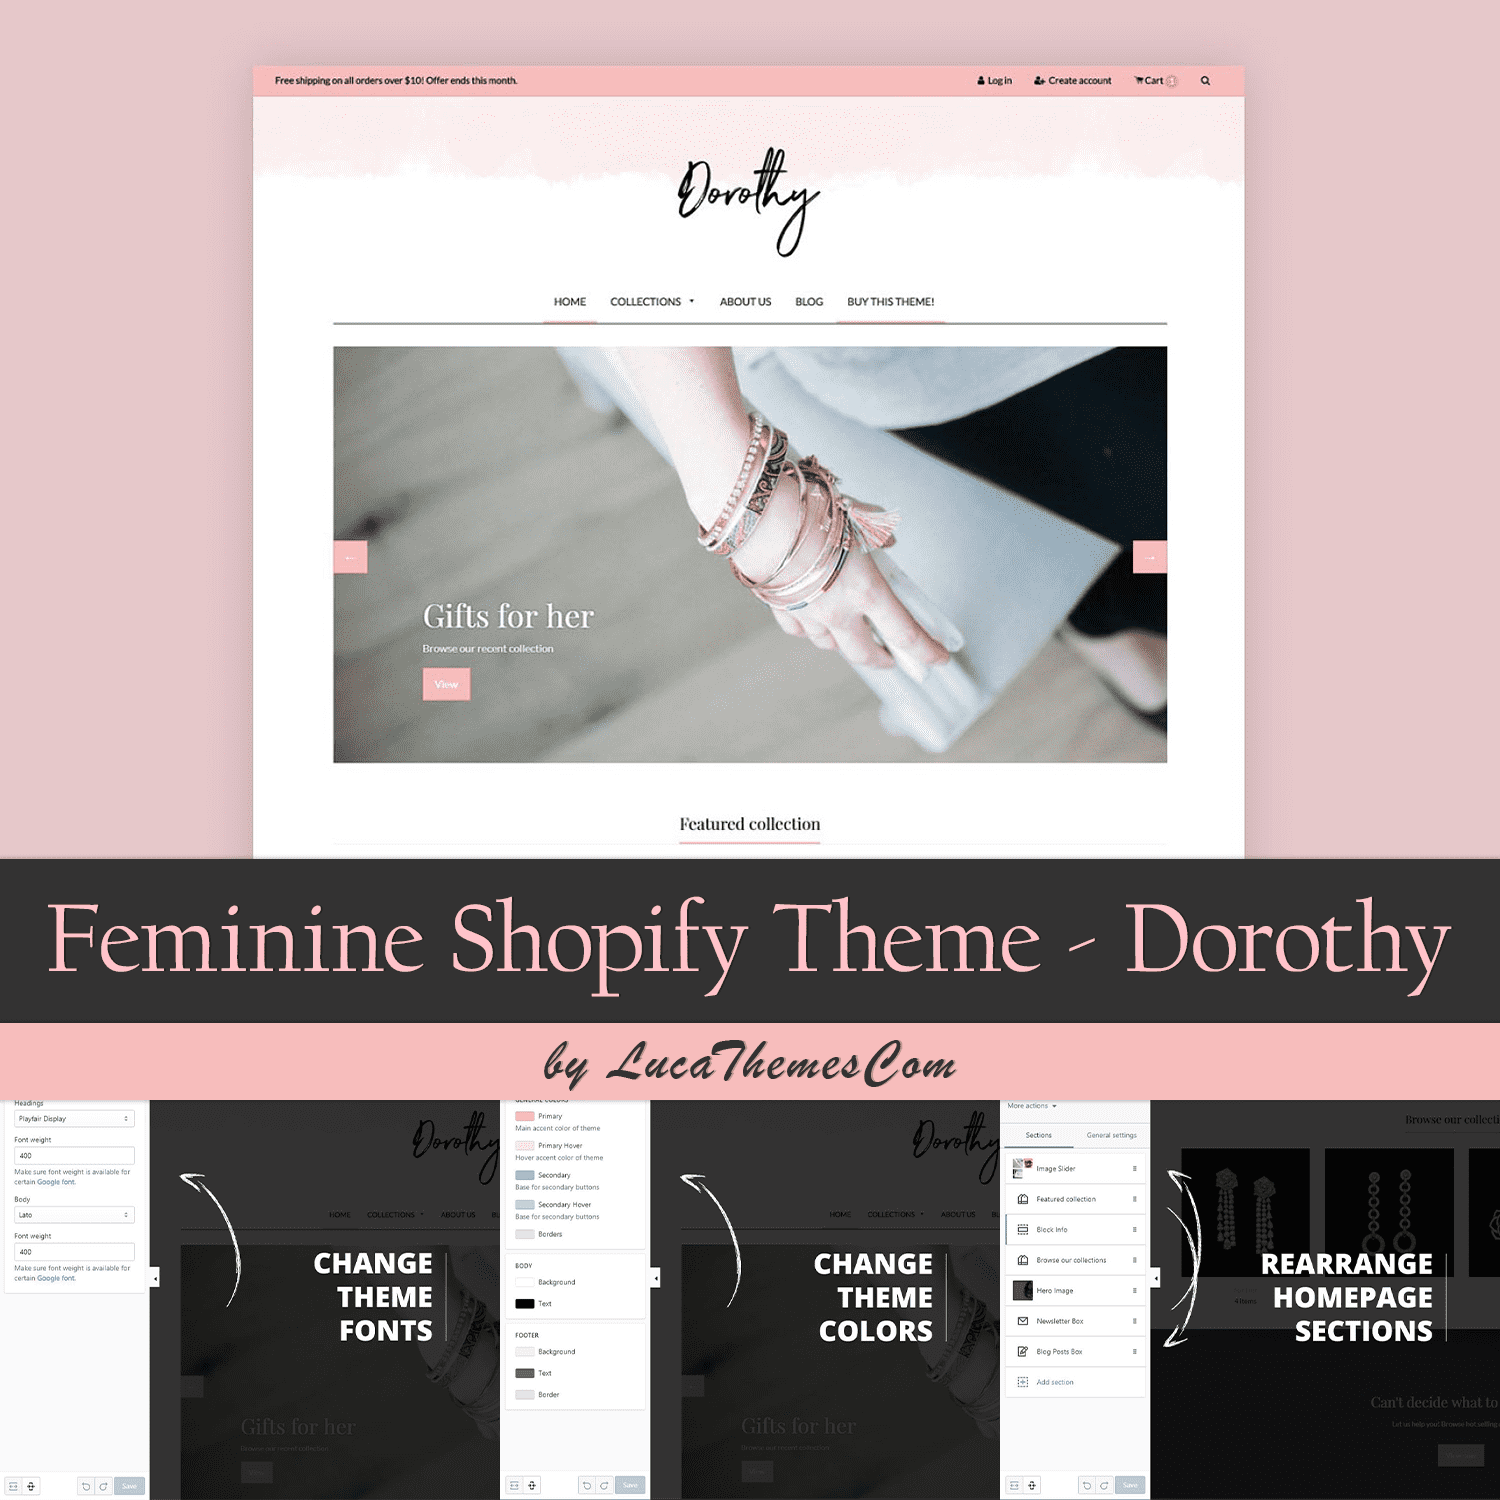 Feminine Shopify Theme - Dorothy cover.